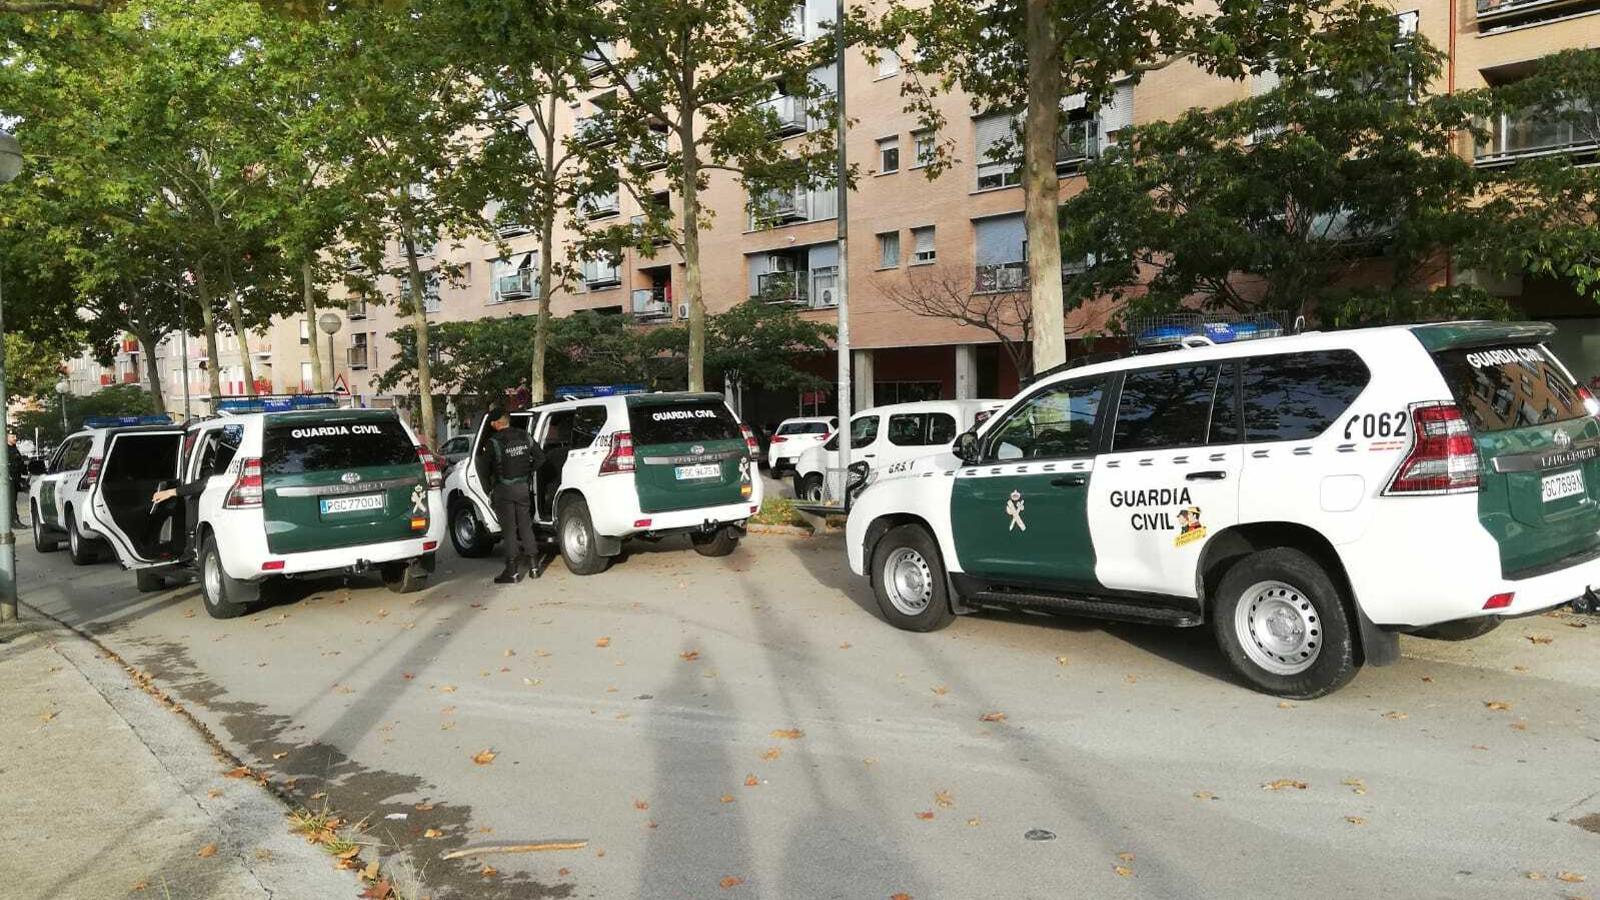 Vehicles policials a Cerdanyola